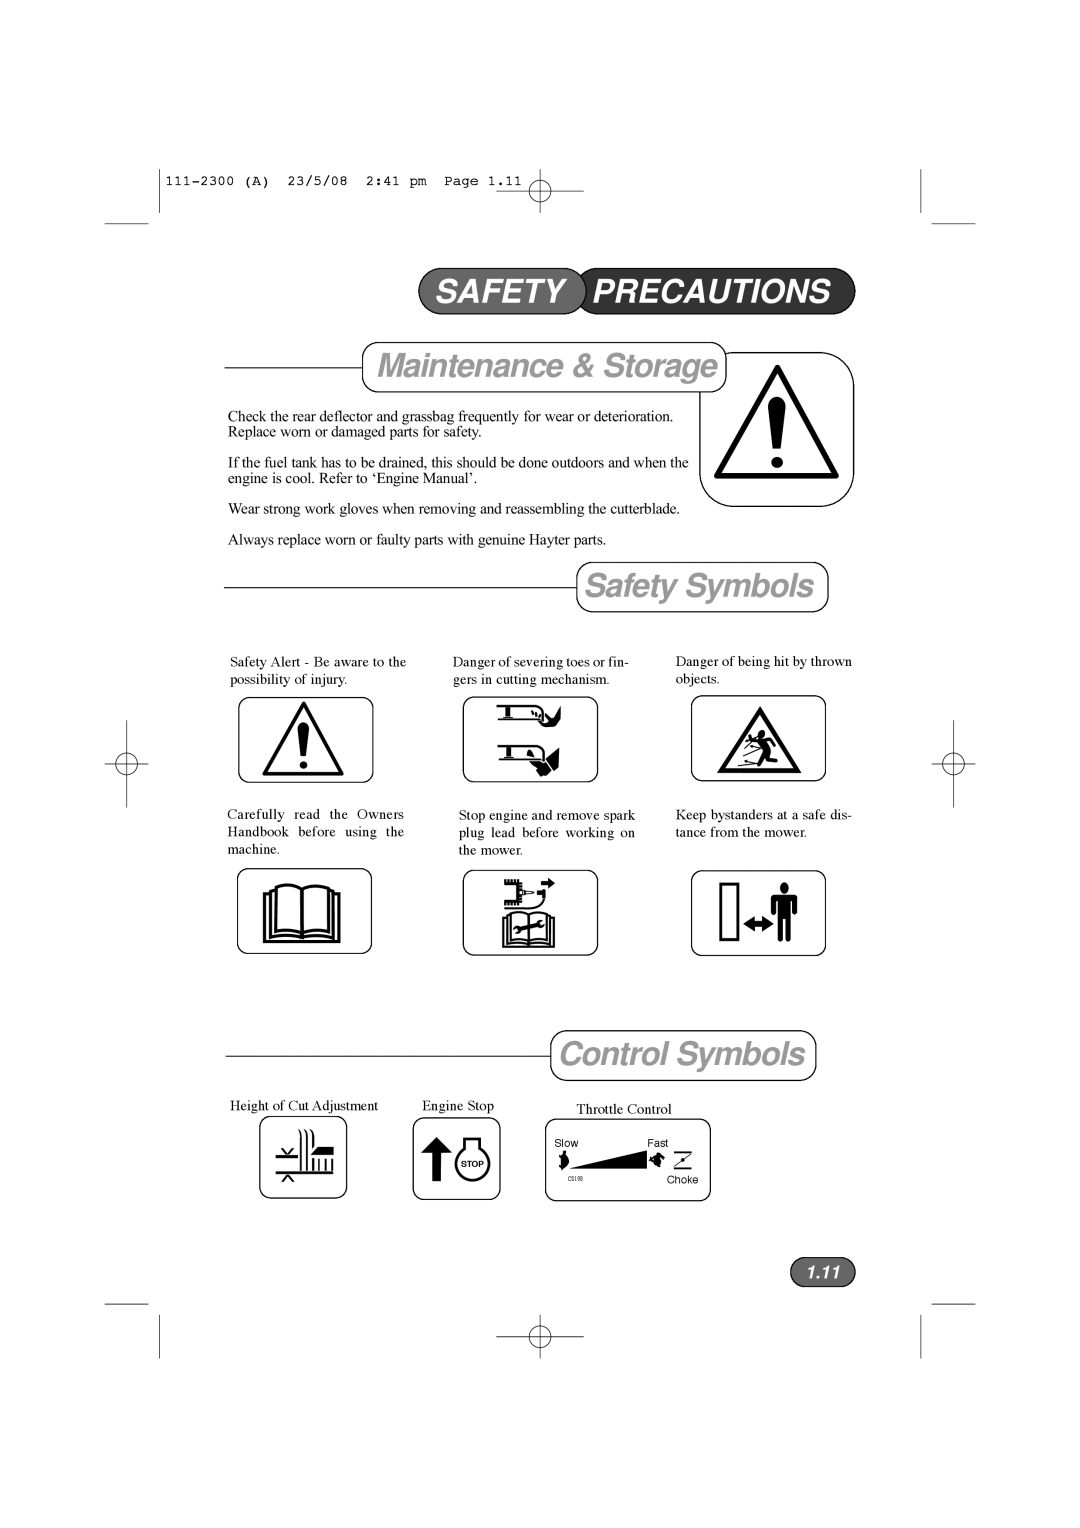 Hayter Mowers 432F, 434F, 435F, 433F manual Safety Symbols, Control Symbols, 1.11, Safety Precautions, Maintenance & Storage 